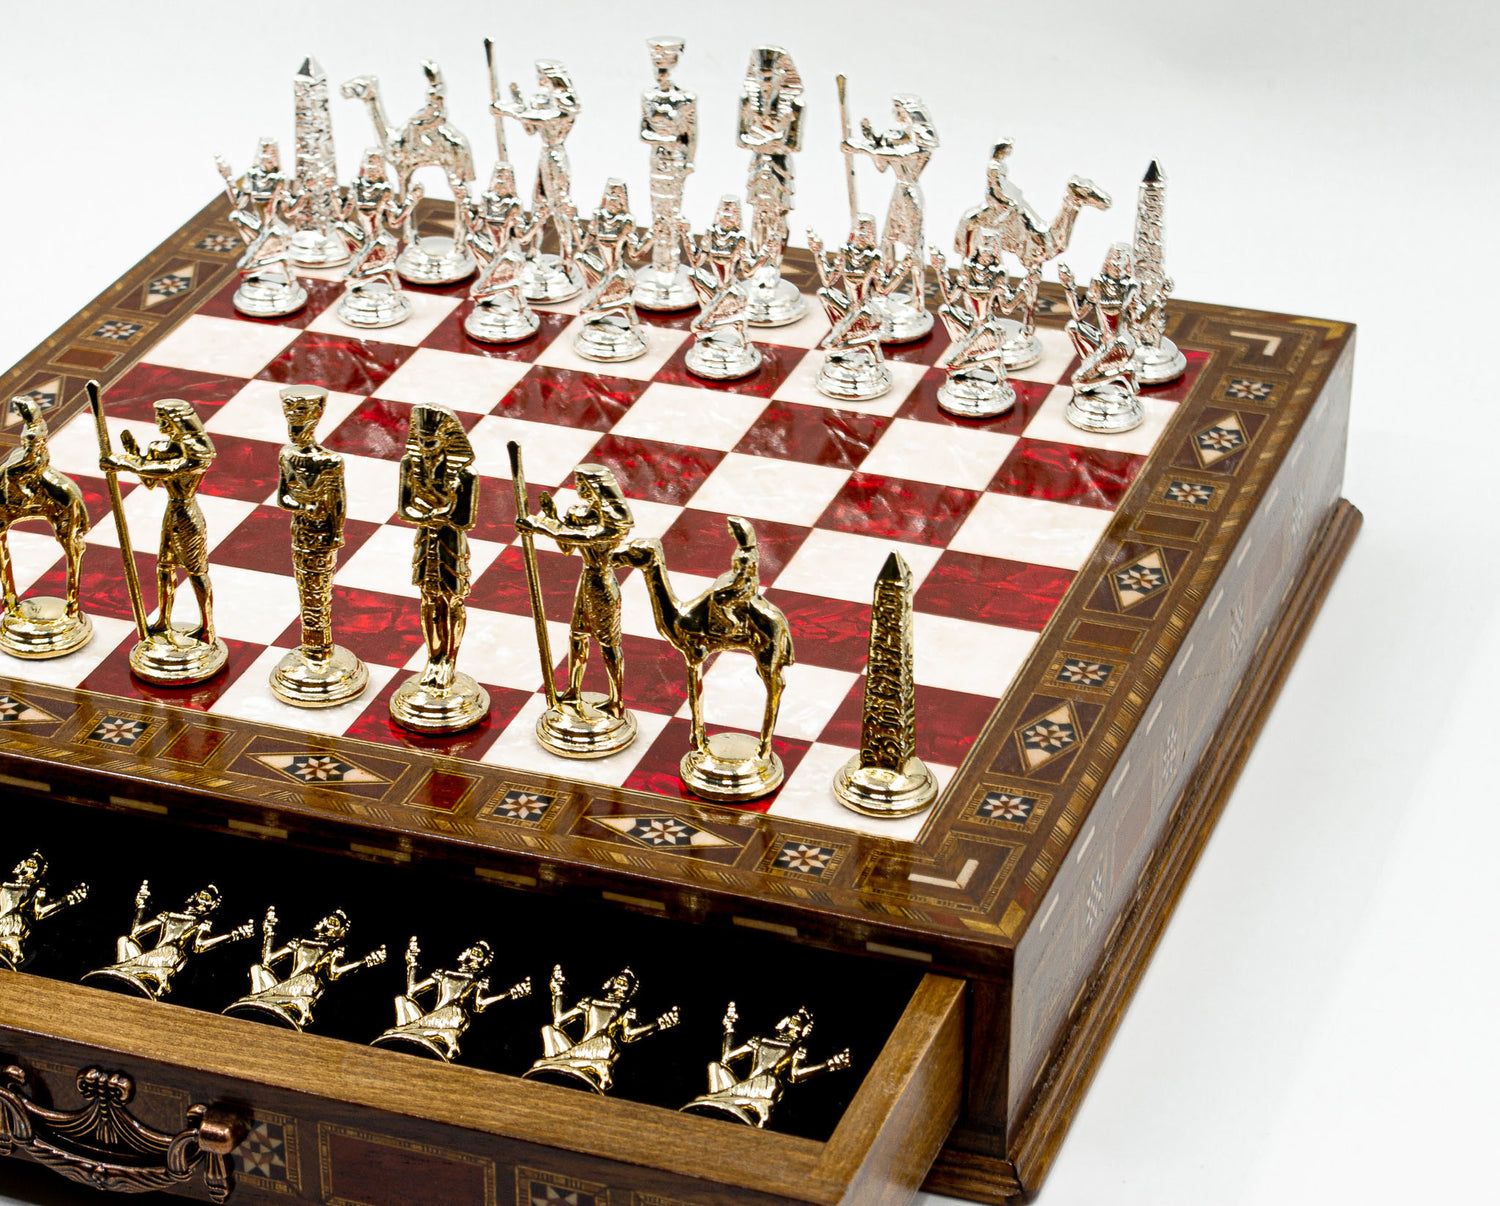 Handmade Chess Set - Egyptian: Wood with Drawer Storage - Ketohandcraft